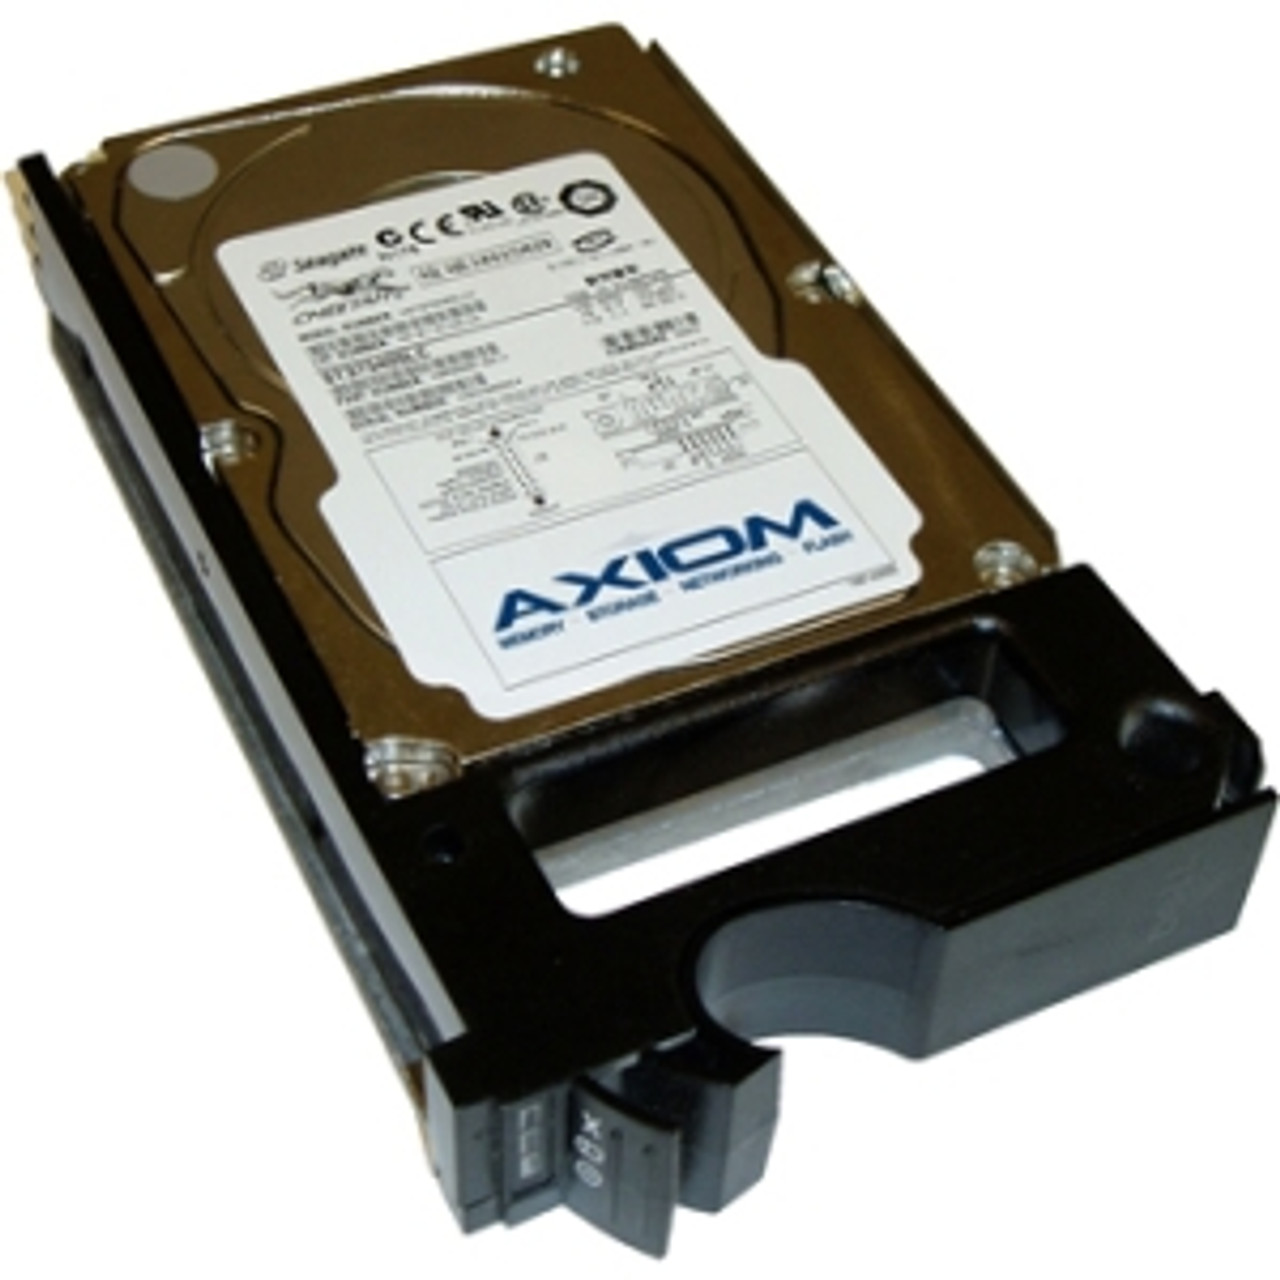 44W2244-AXA - Axiom 44W2244-AXA 600 GB 3.5 Internal Hard Drive - 6Gb/s SAS - 15000 rpm - Hot Swappable